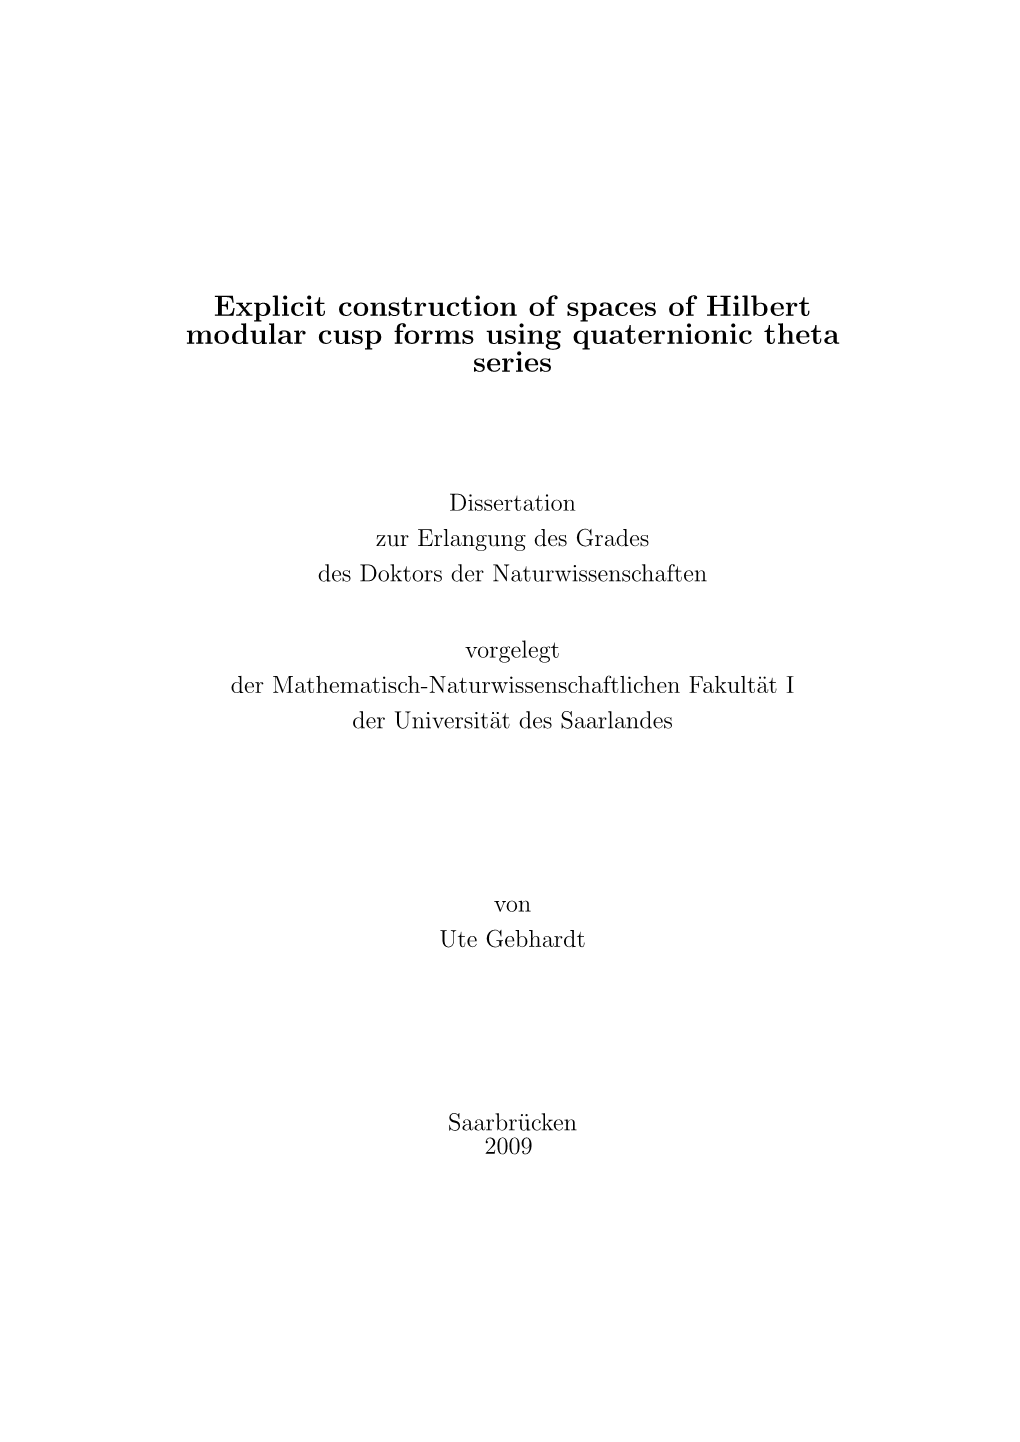 Explicit Construction of Spaces of Hilbert Modular Cusp Forms Using Quaternionic Theta Series